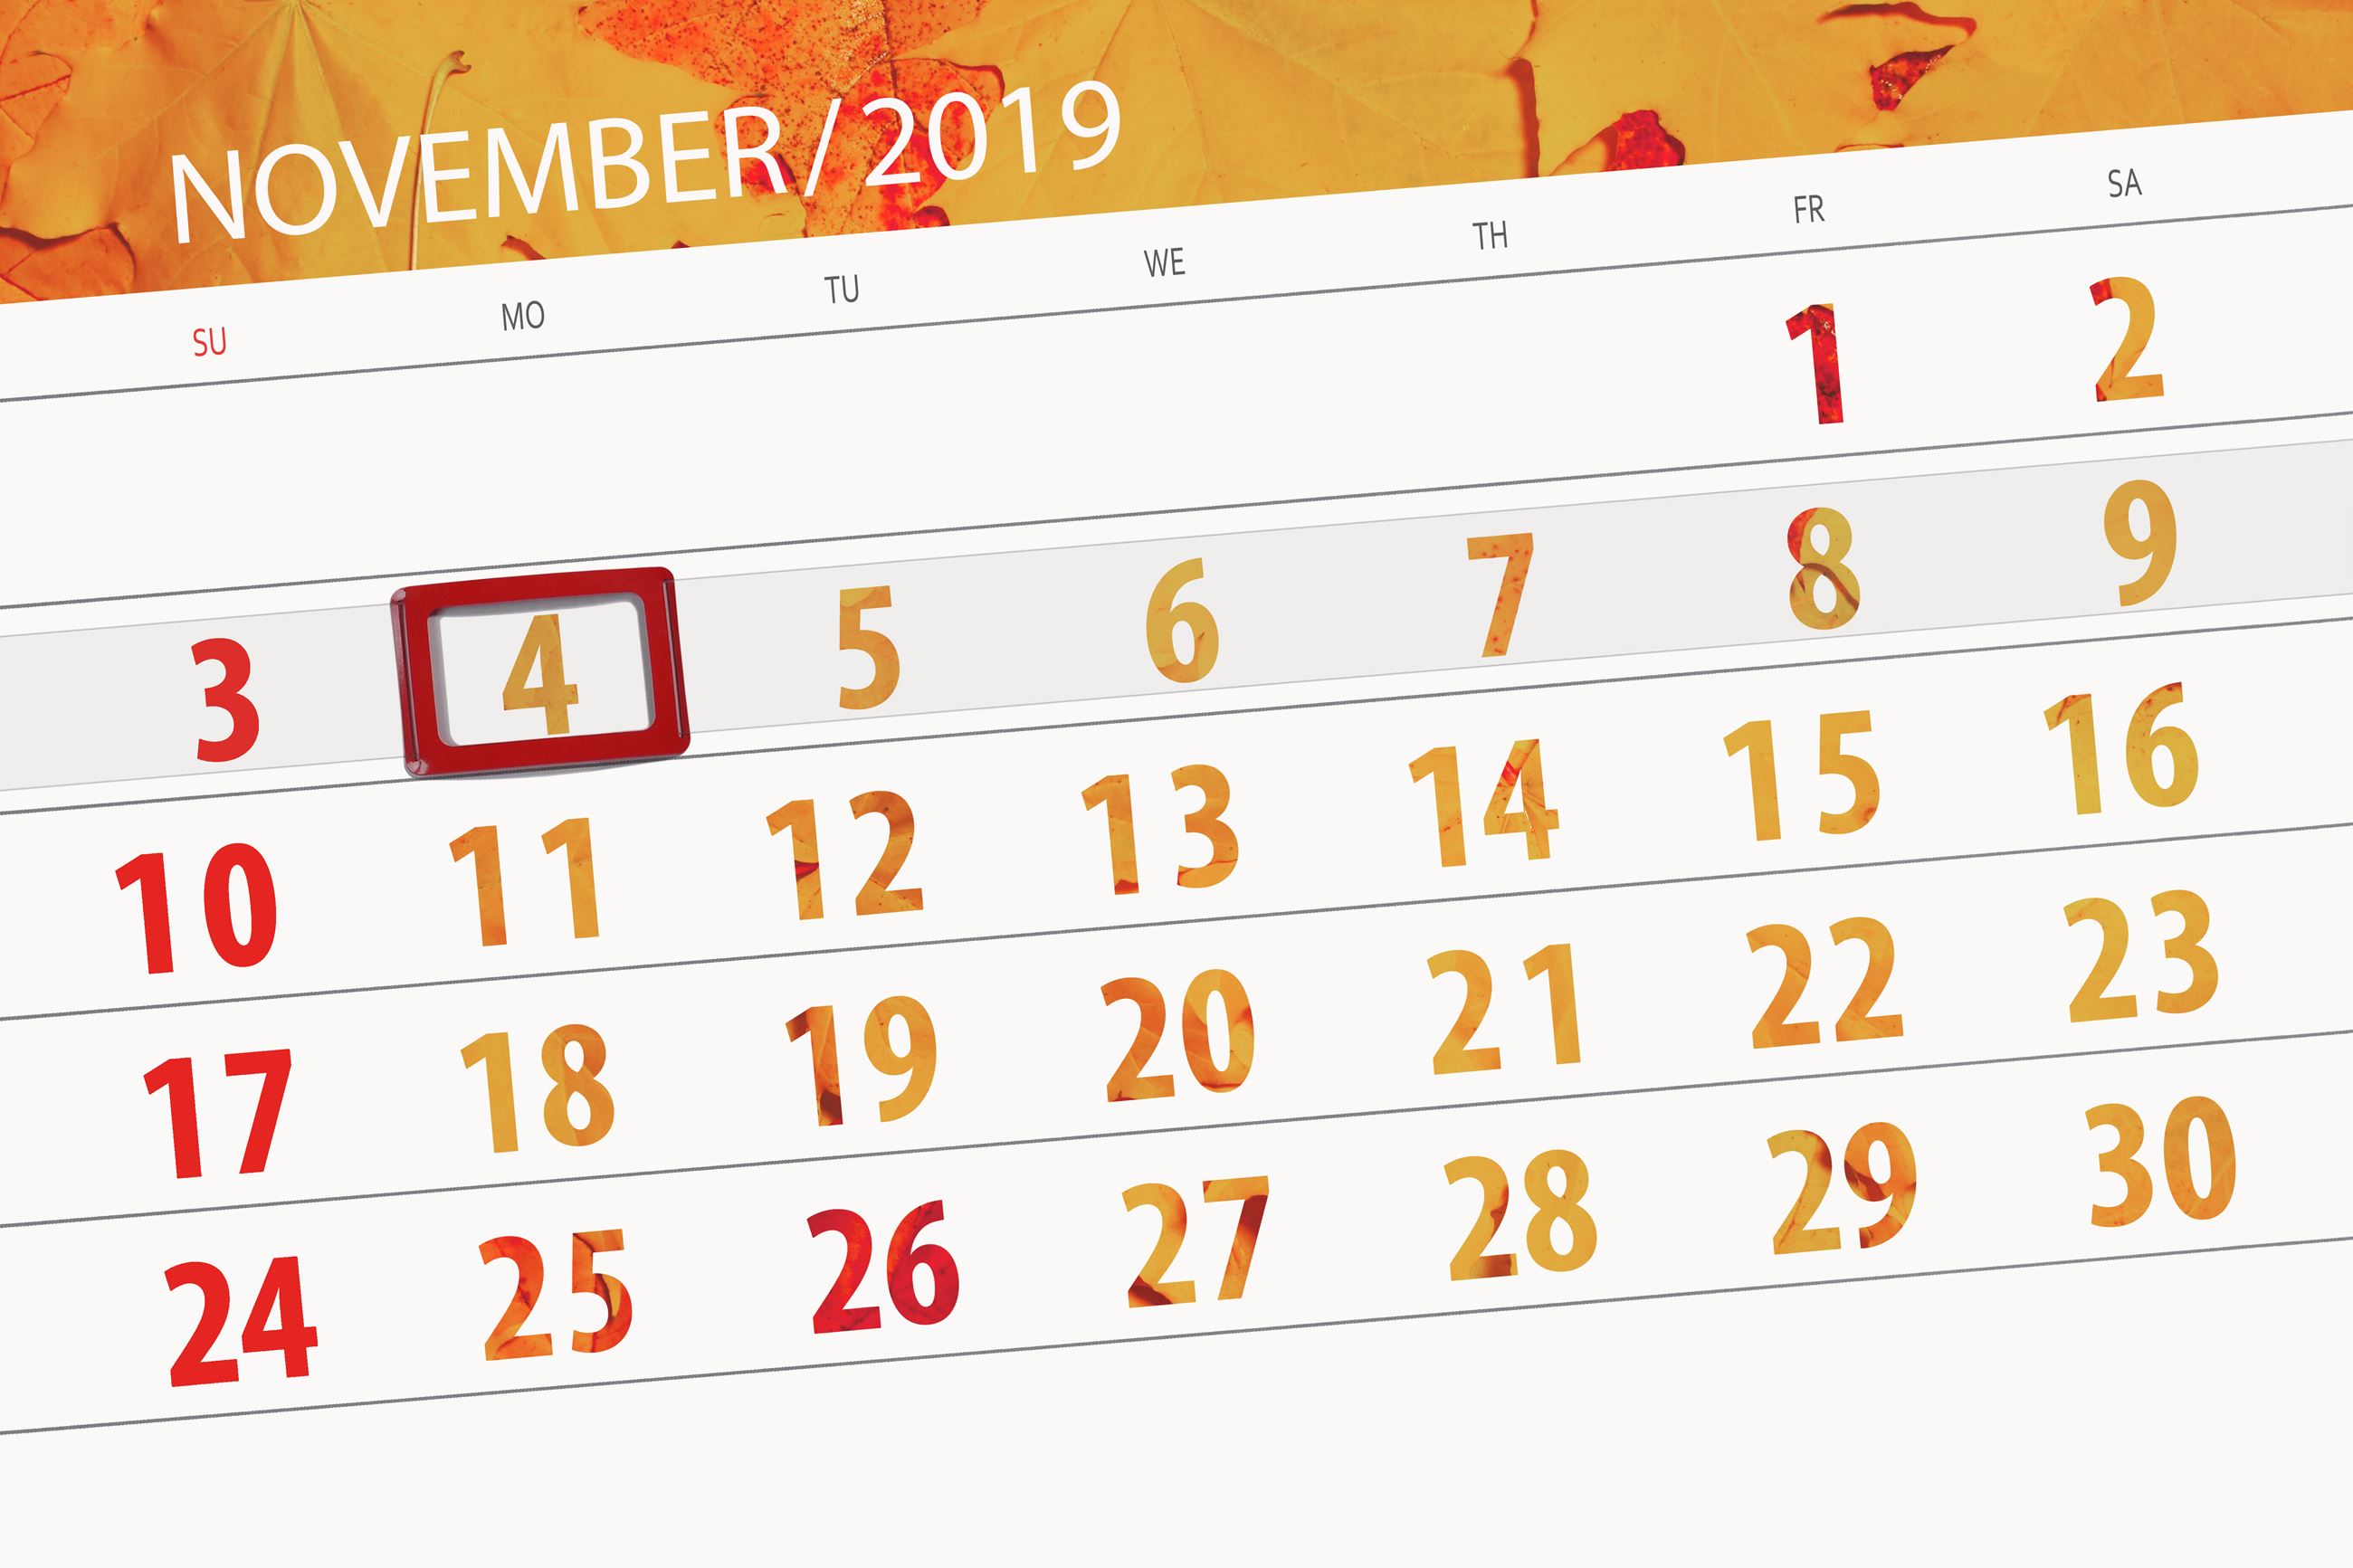 November calendar image